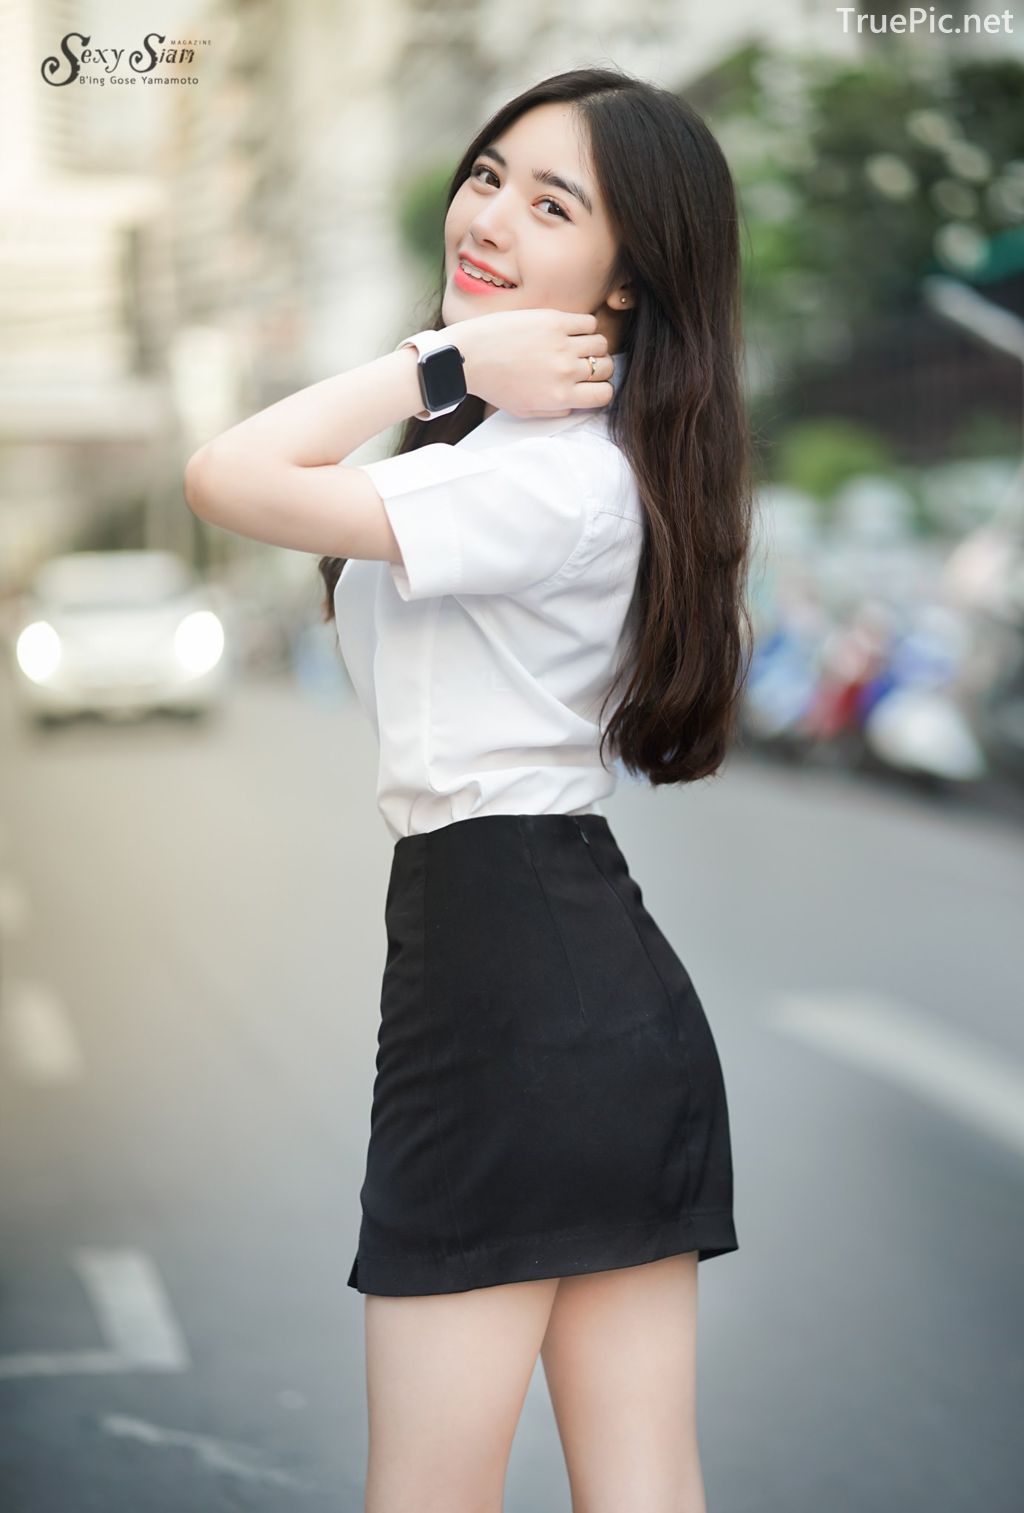 Thailand beautiful girl - Chonticha Chalimewong - Thai Girl Student uniform - TruePic.net - Picture 26